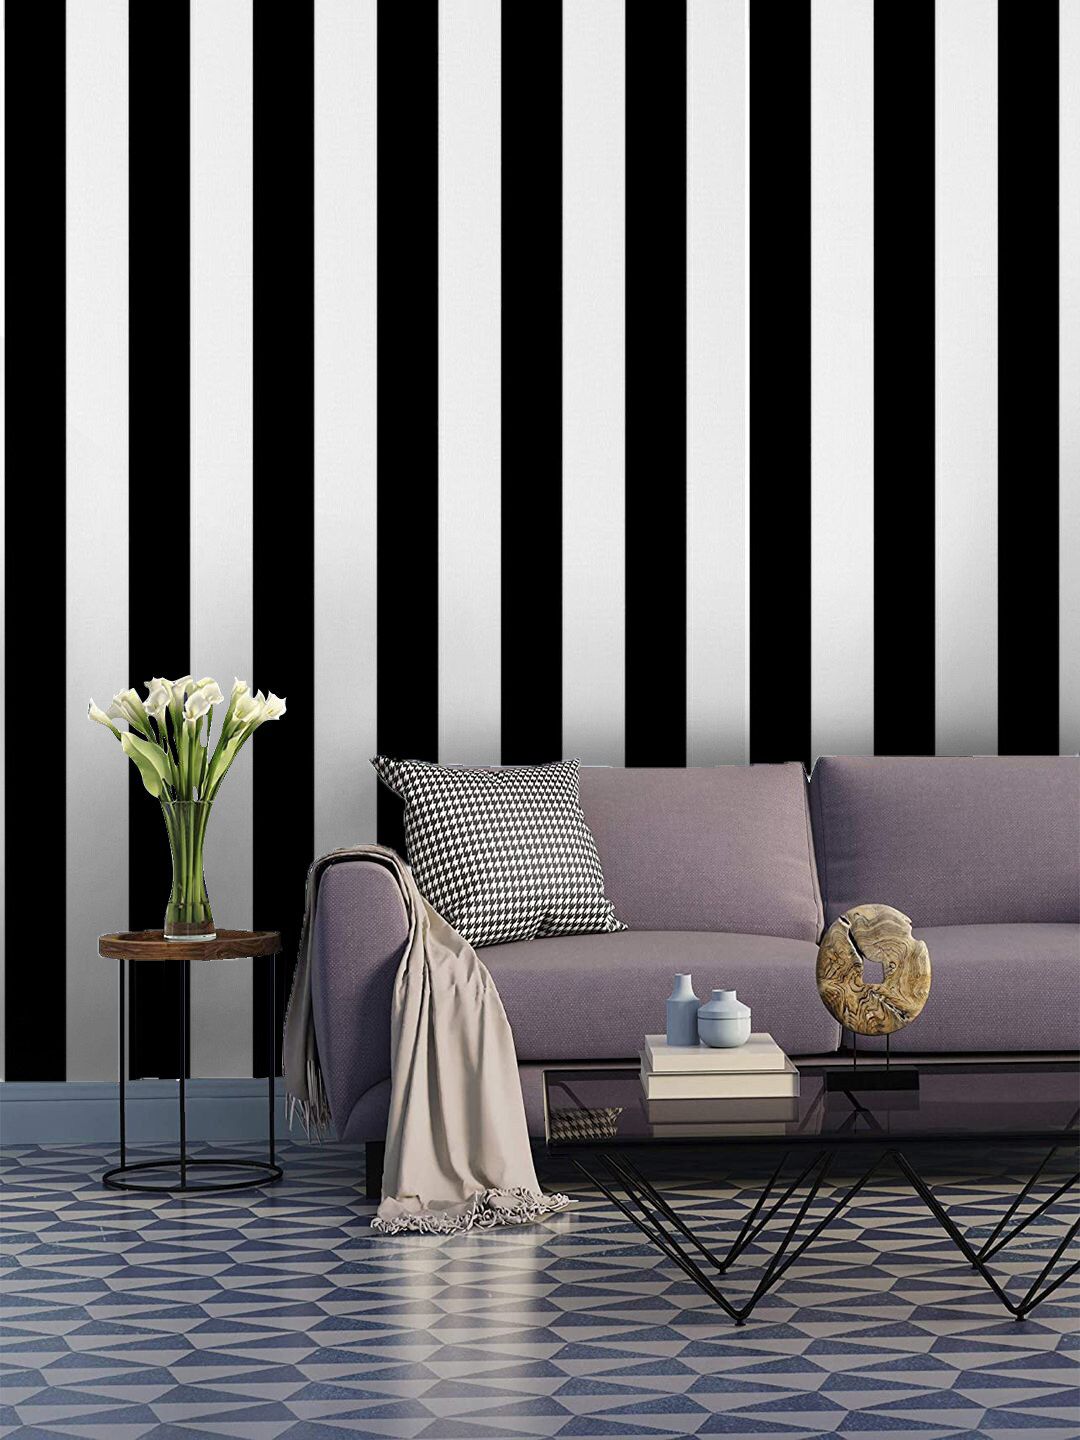 Jaamso Royals White & Black Self-adhesive & Waterproof Zebra Wallpaper Price in India